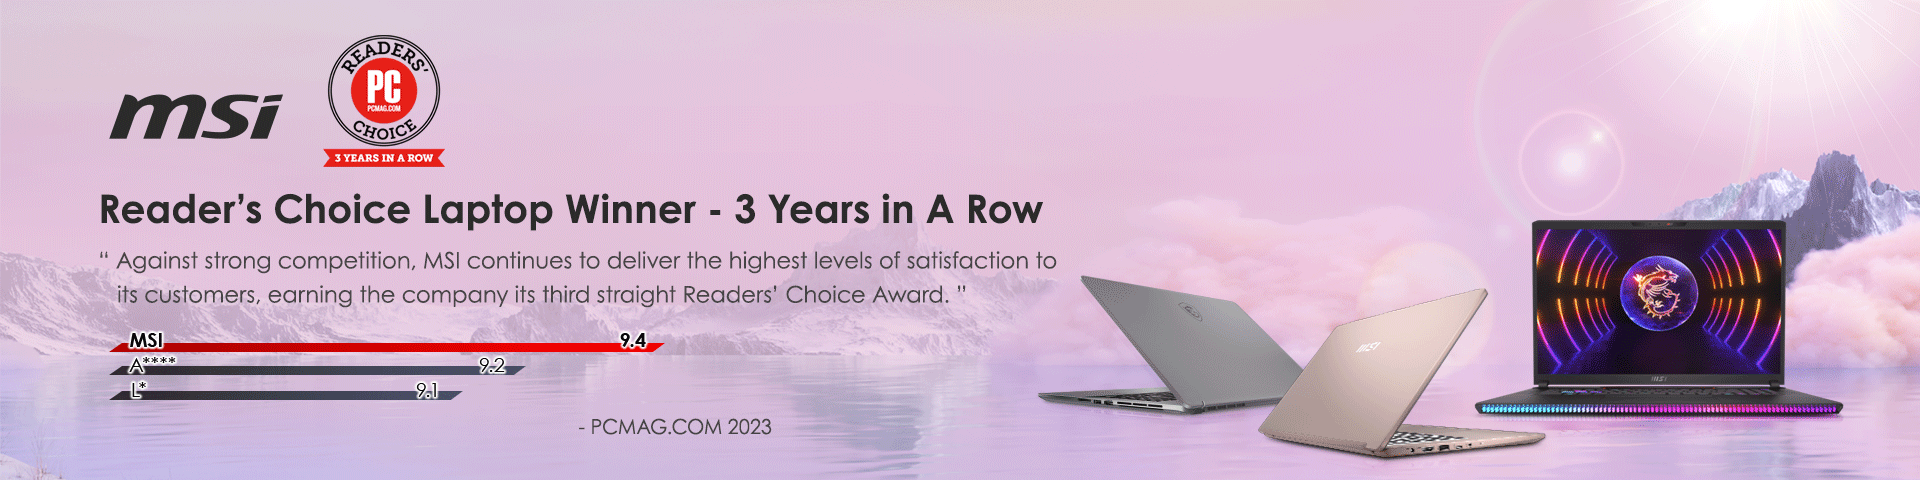 2023-Reader's-Choice-Laptop-Winner_1920x480.png__PID:f0711896-4c85-4ab0-aac1-e2d92f4d1cfa